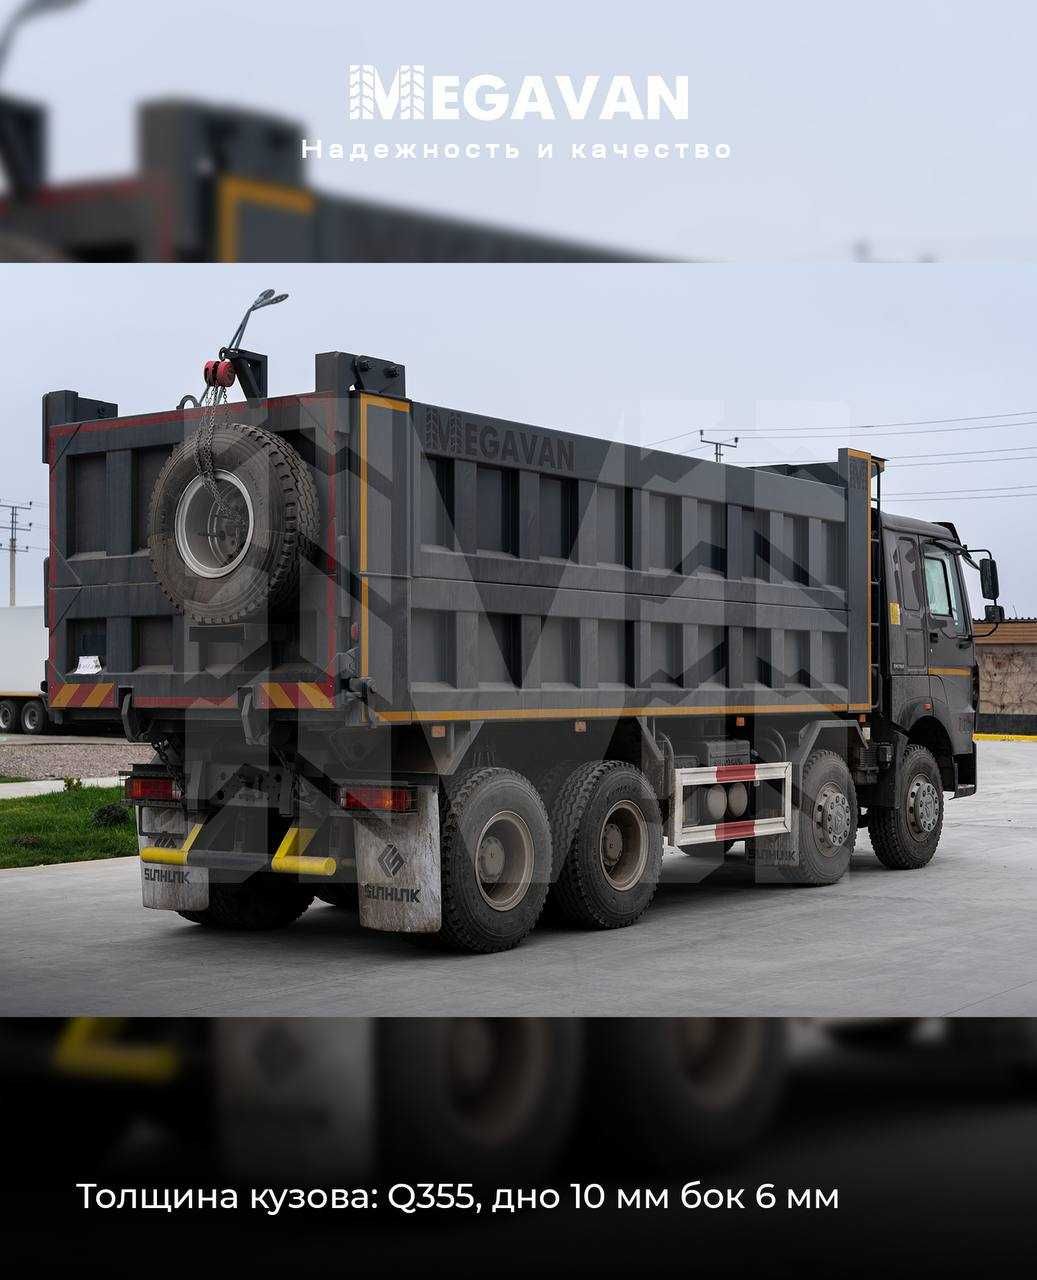 HOWO A7 8x4 40 tonna v nalichii Megavan